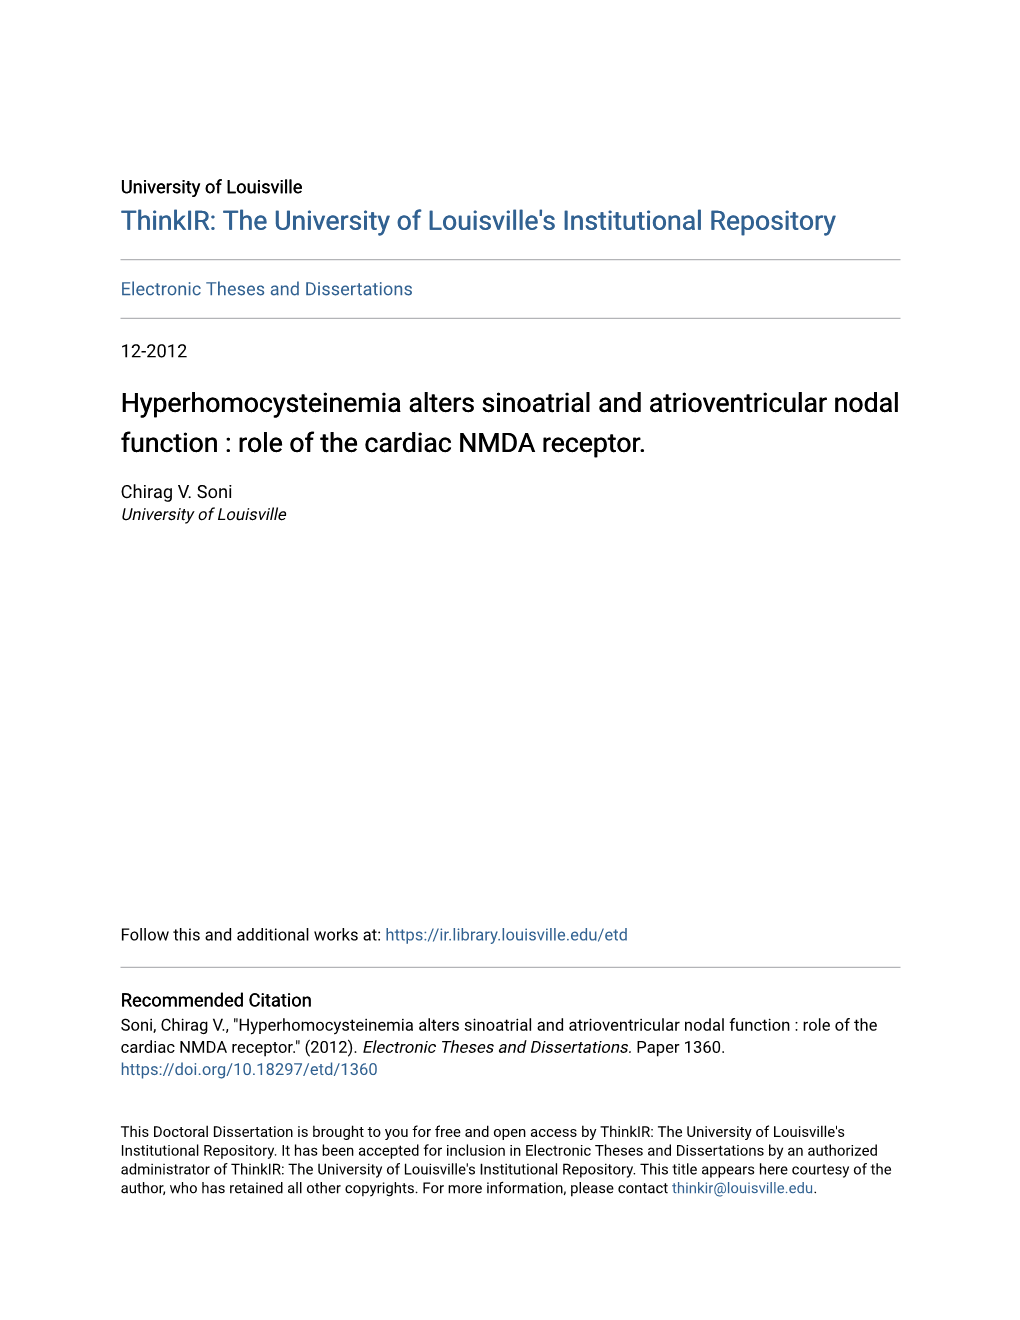 Hyperhomocysteinemia Alters Sinoatrial and Atrioventricular Nodal Function : Role of the Cardiac NMDA Receptor